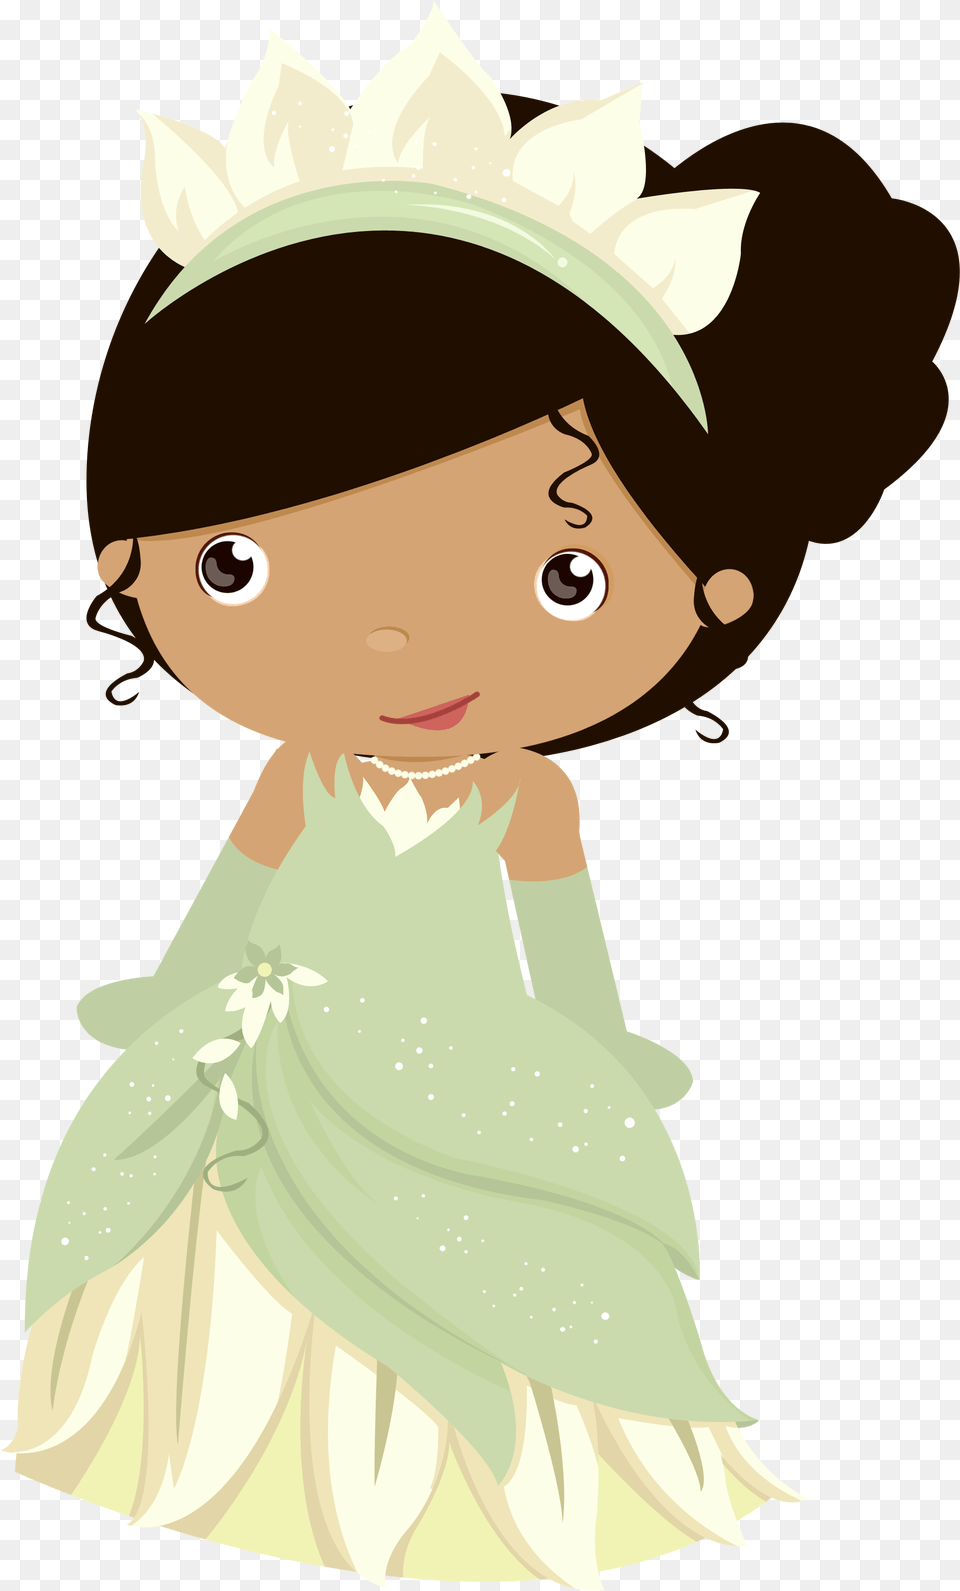 Disney Clipart Cute Clipart Disney Princess Tiana Princesa Y El Sapo Bebe, Clothing, Dress, Formal Wear, Fashion Png